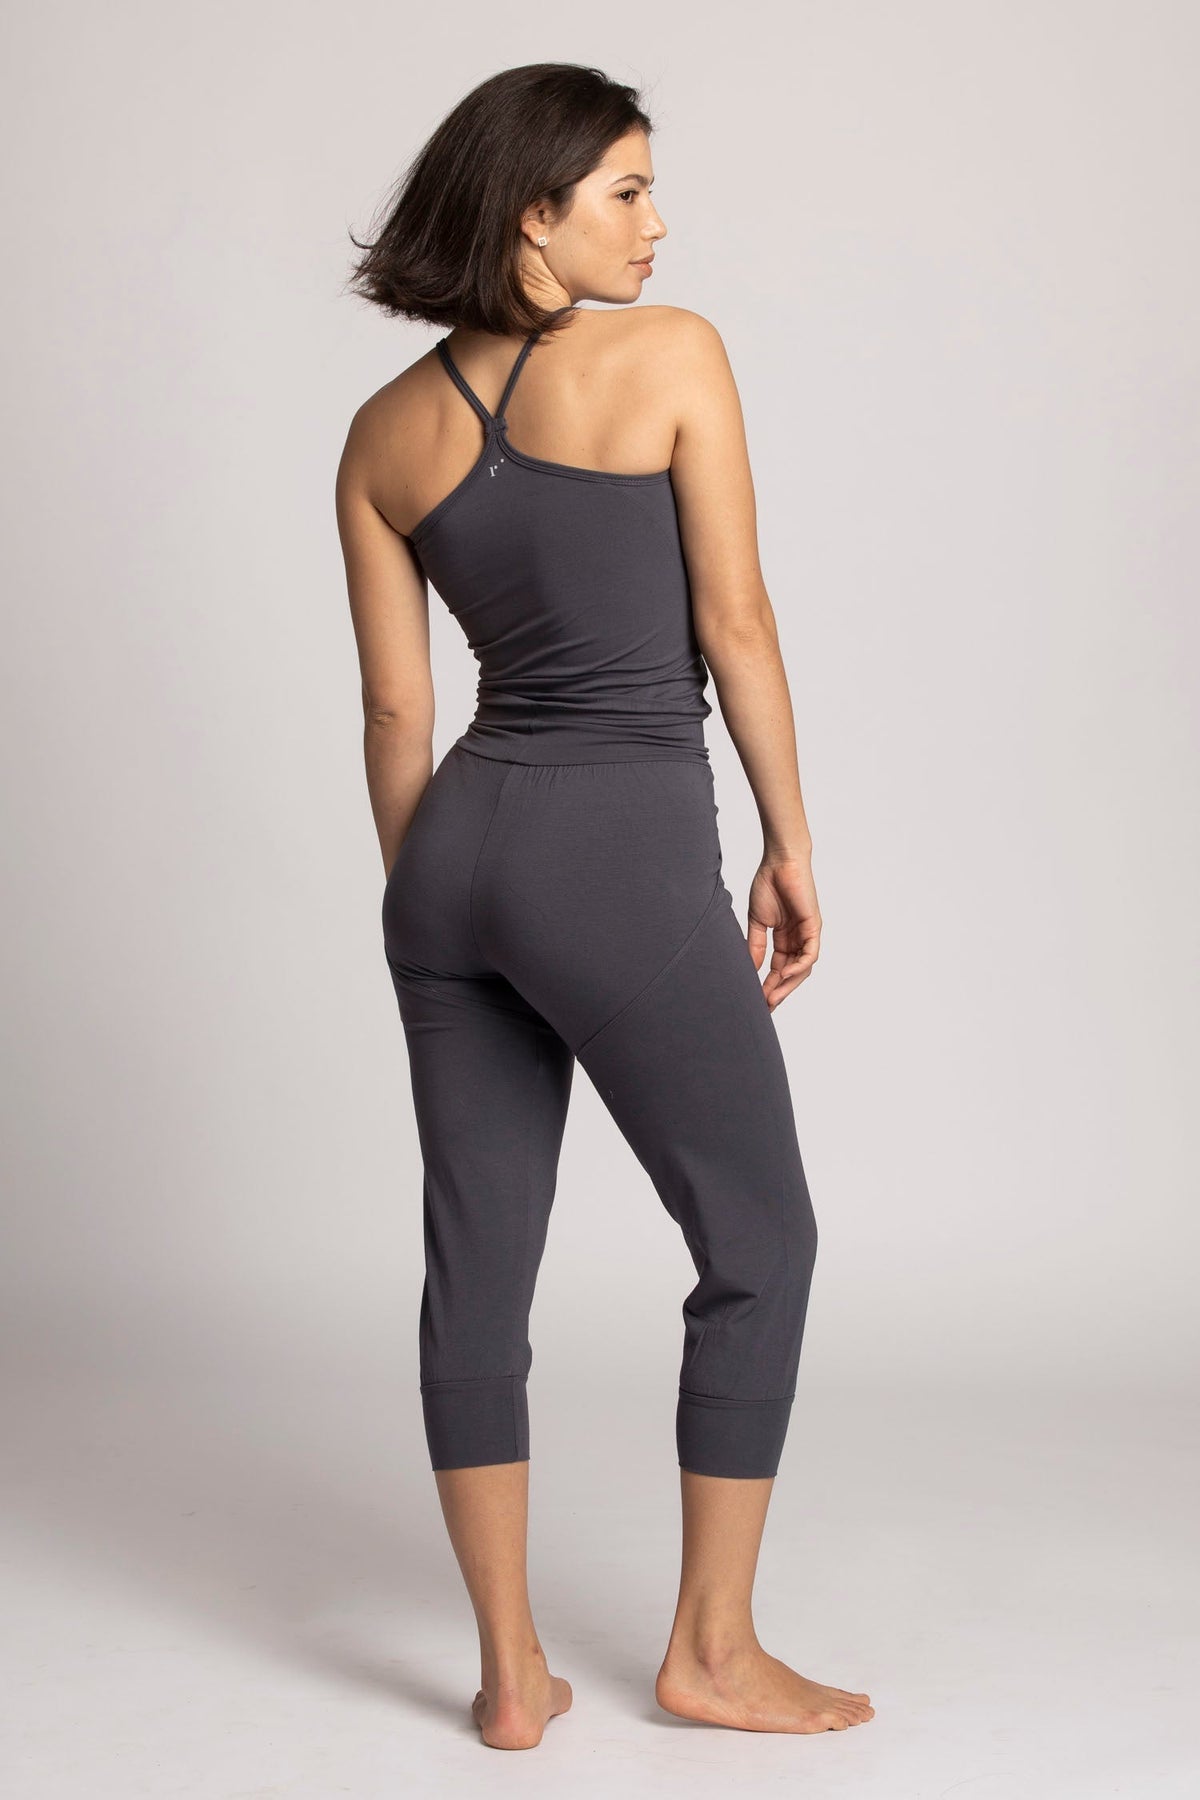 Organic Cotton Yoga Jumpsuit womens clothing Ripple Yoga Wear 